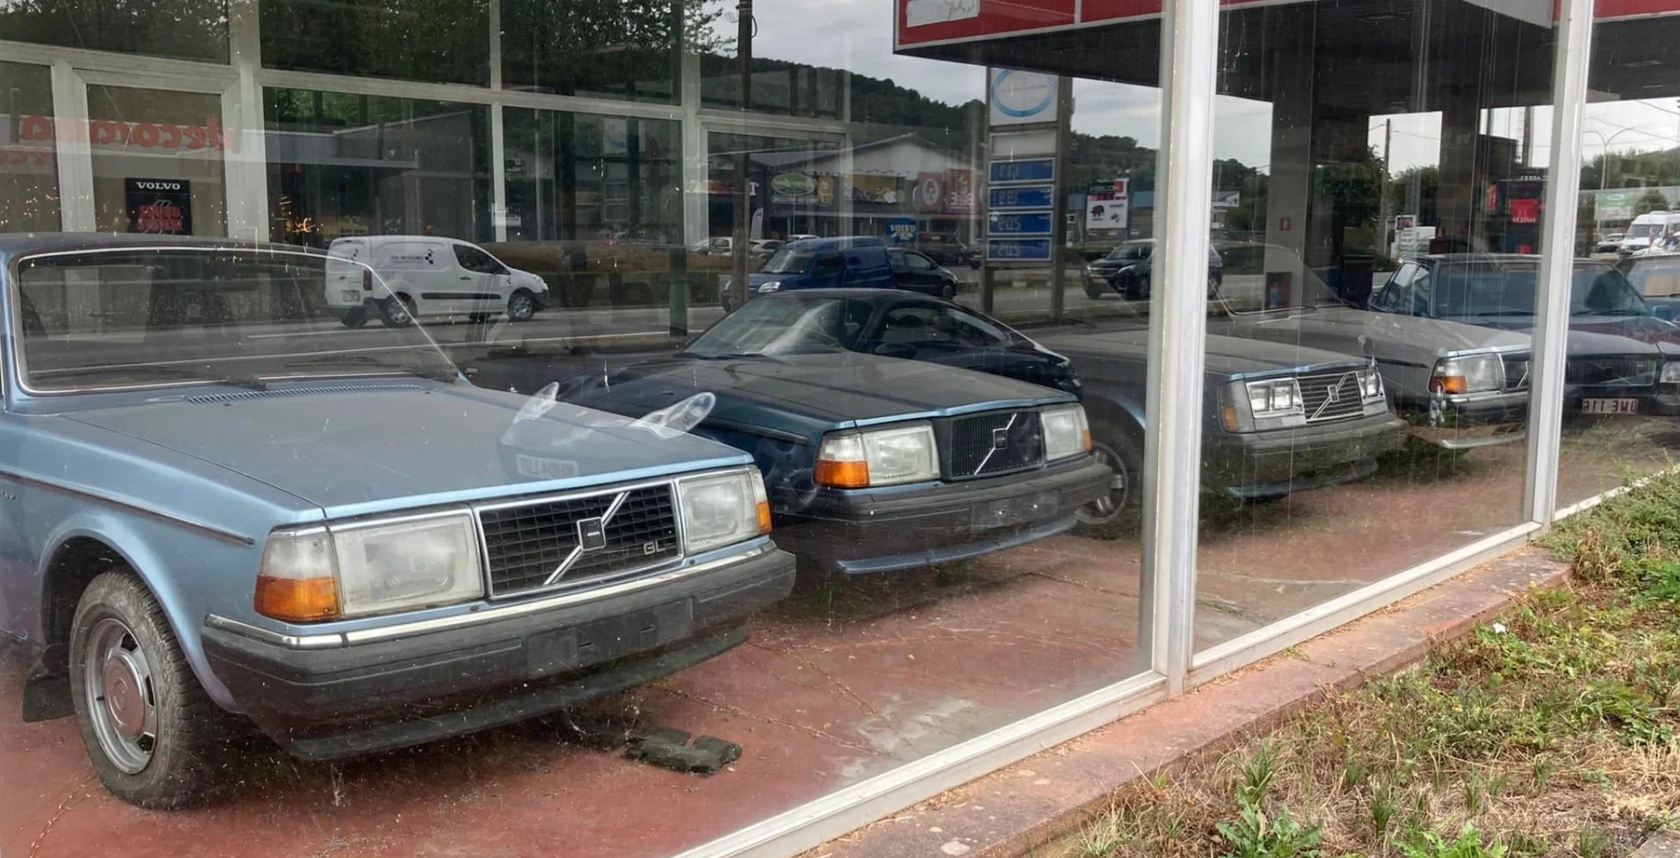 Abandoned Volvo dealership in Belgium